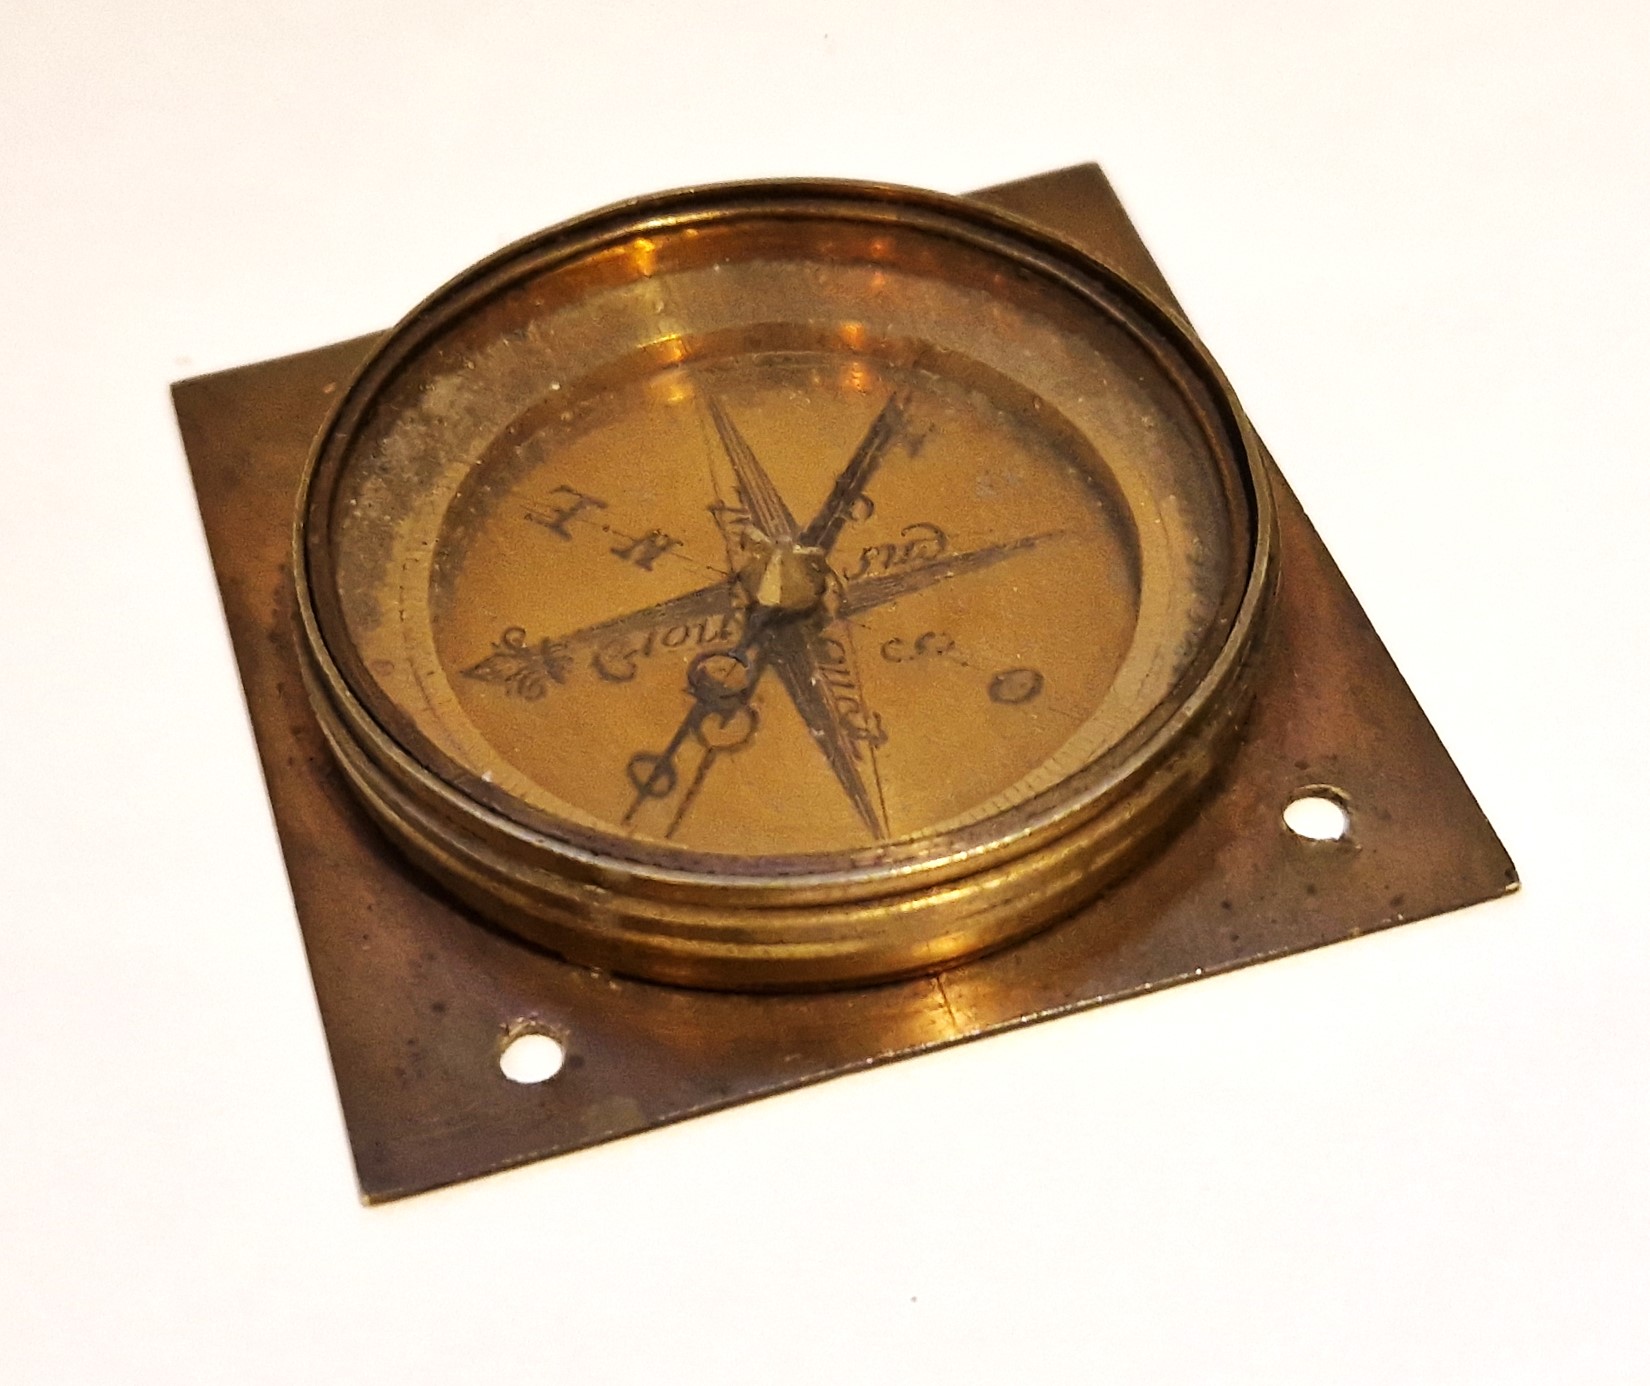 A brass compass, France, 18th century